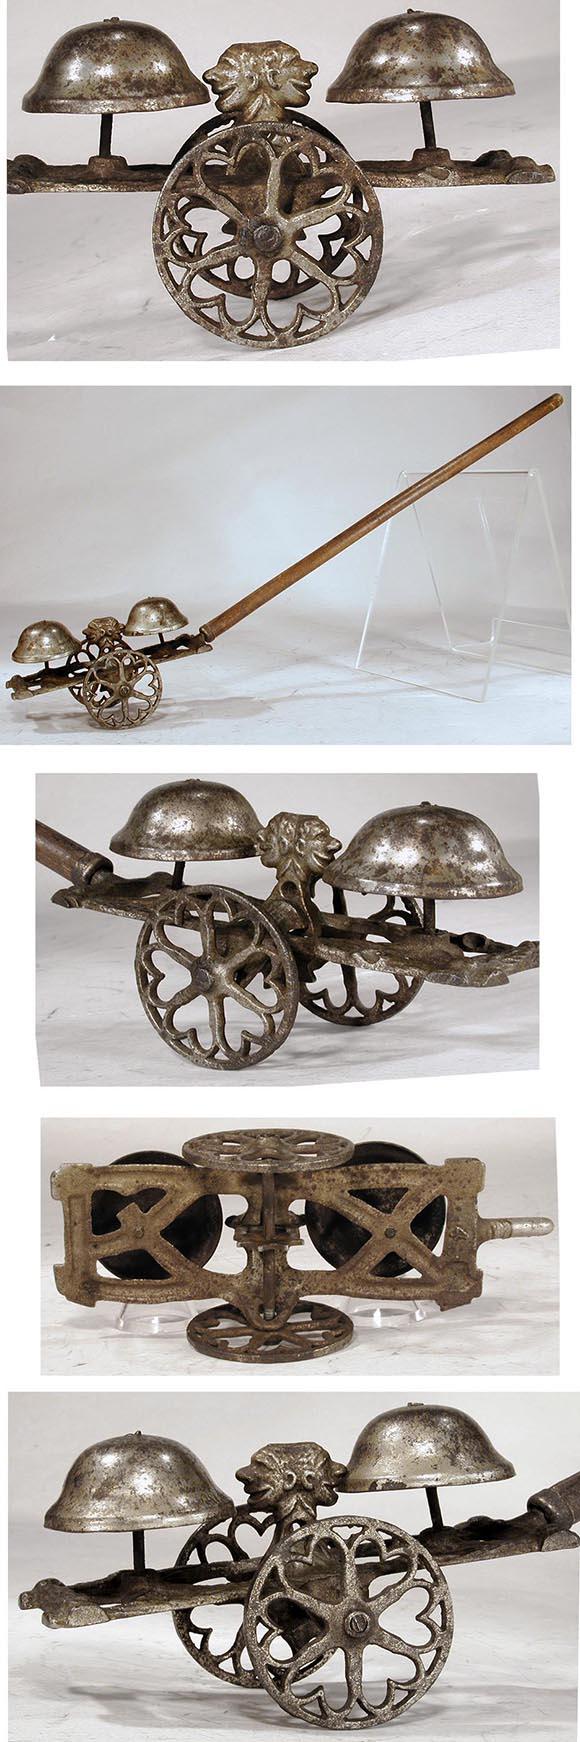 c.1880 Gong Bell Mfg. Co., Double Headed Cast Iron Bell Ringer